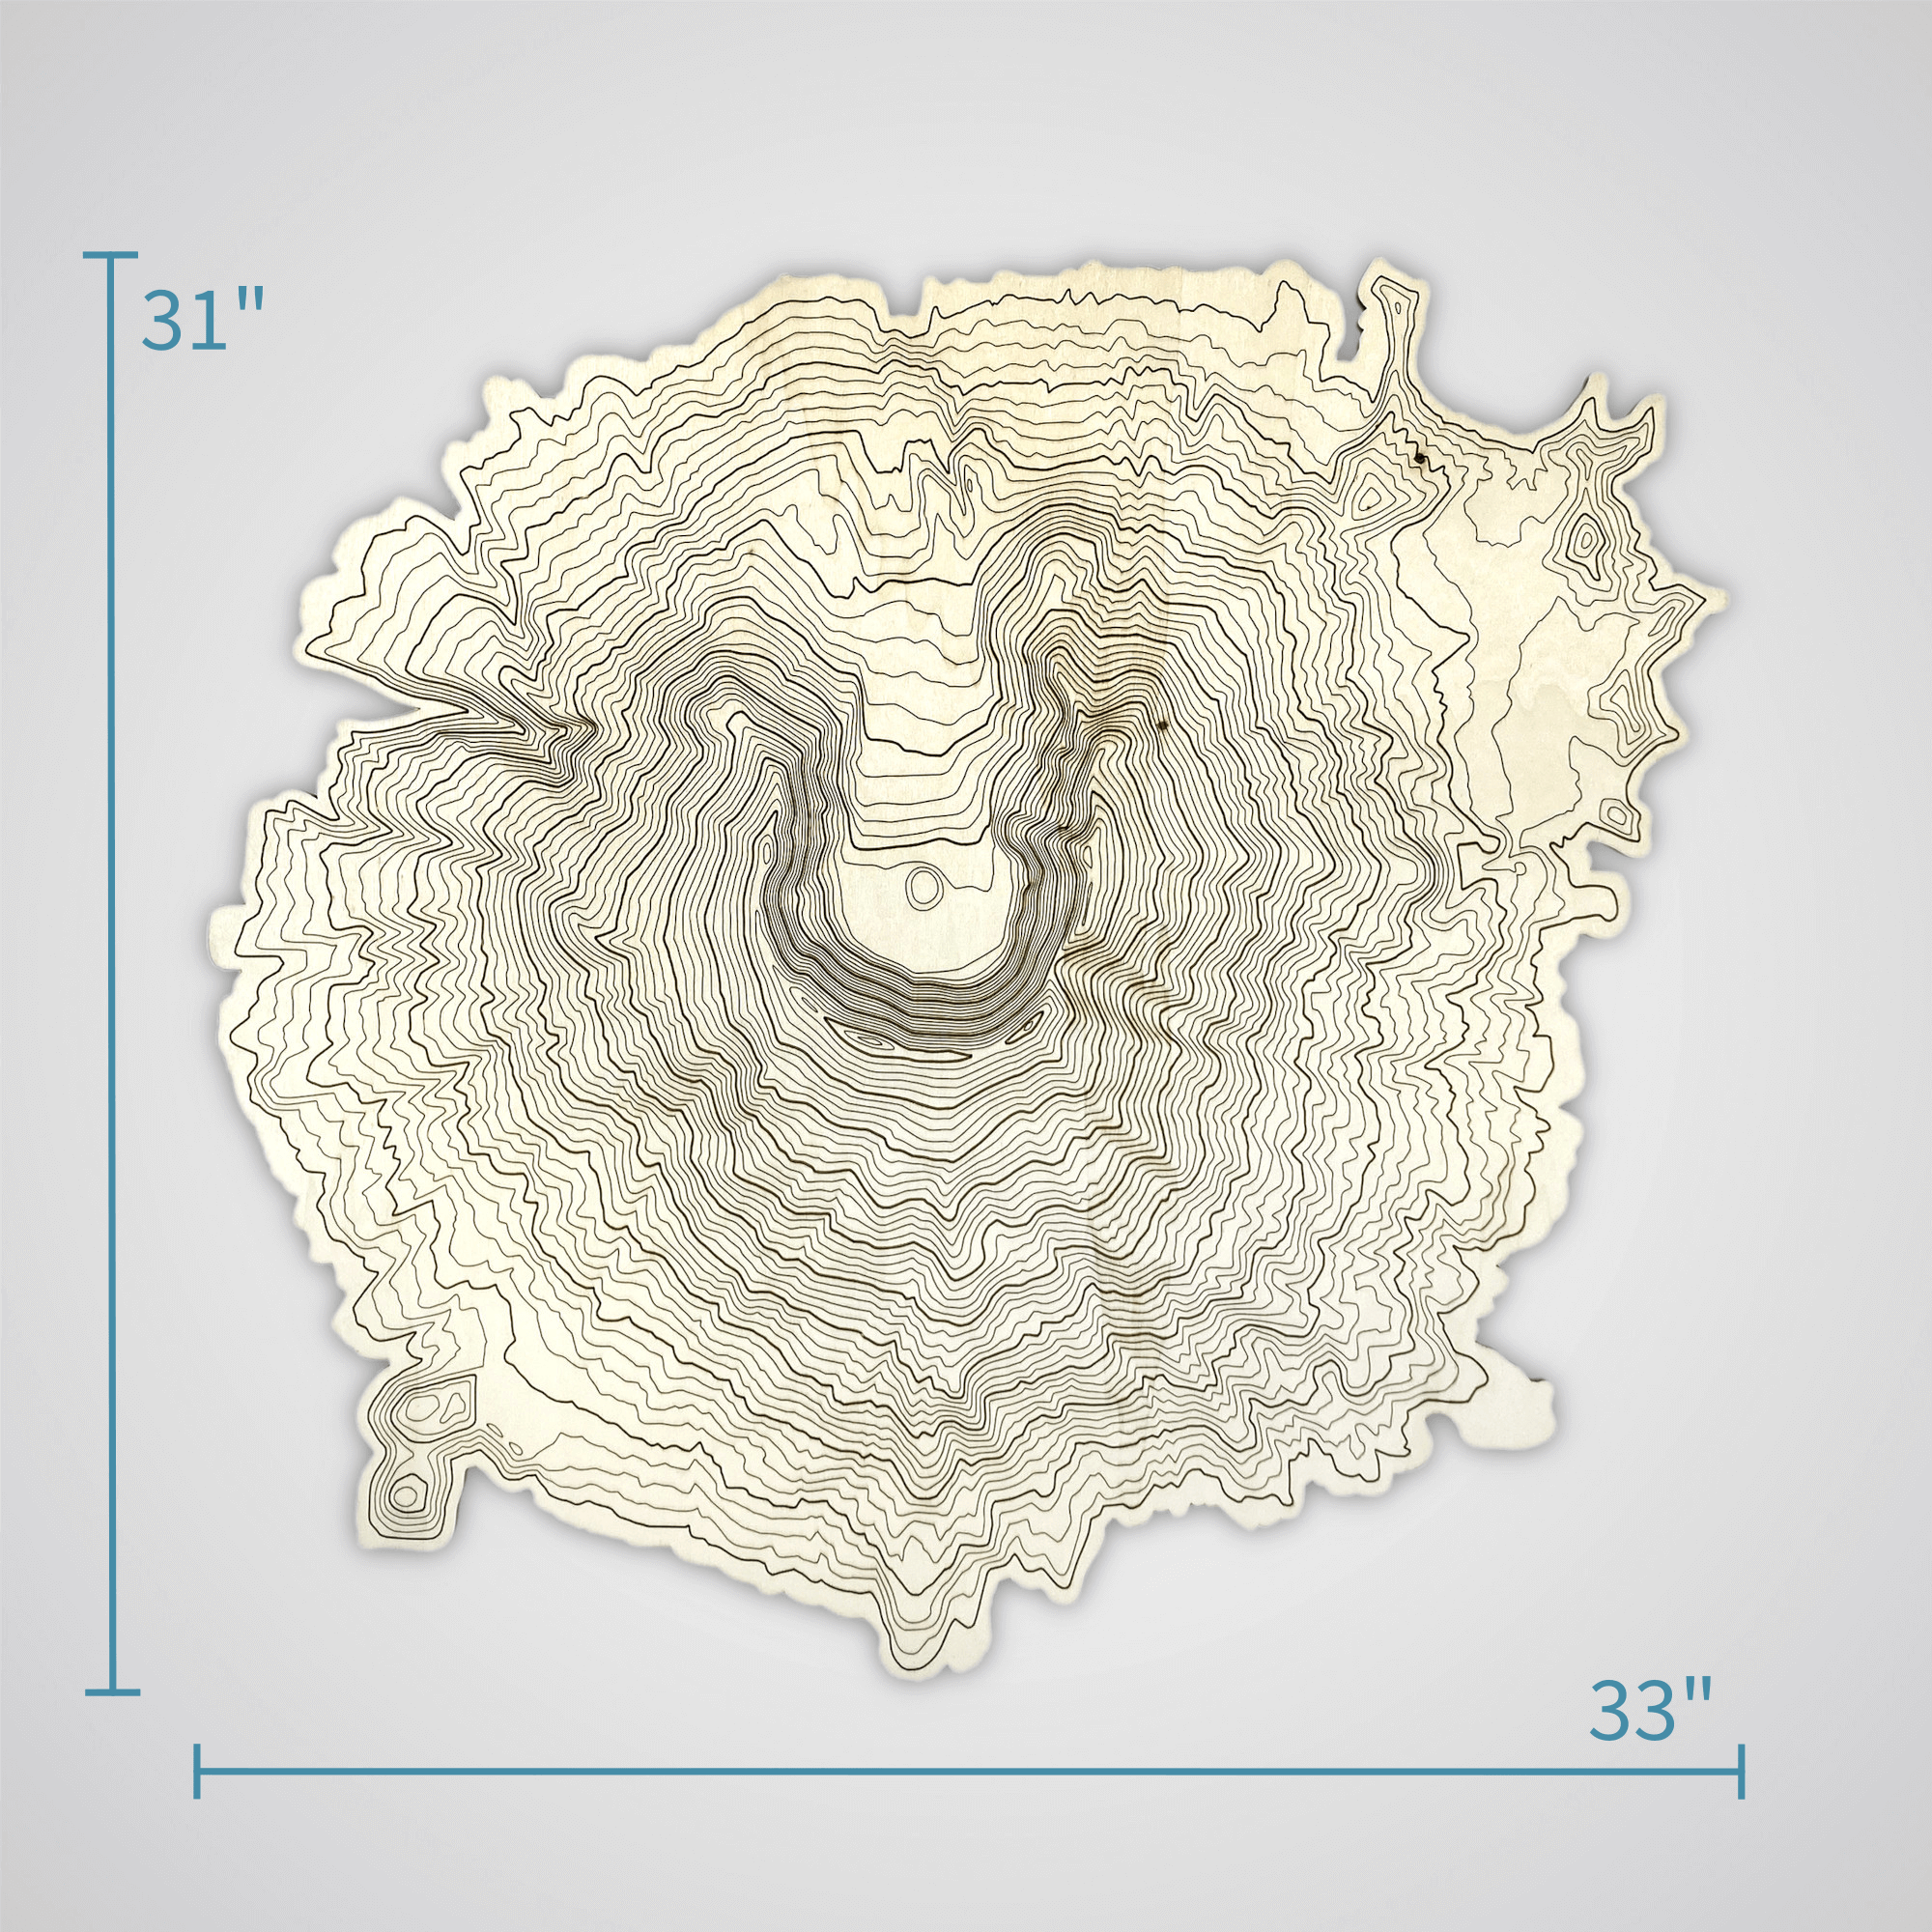 XL Mount St Helens Topography Wall Art